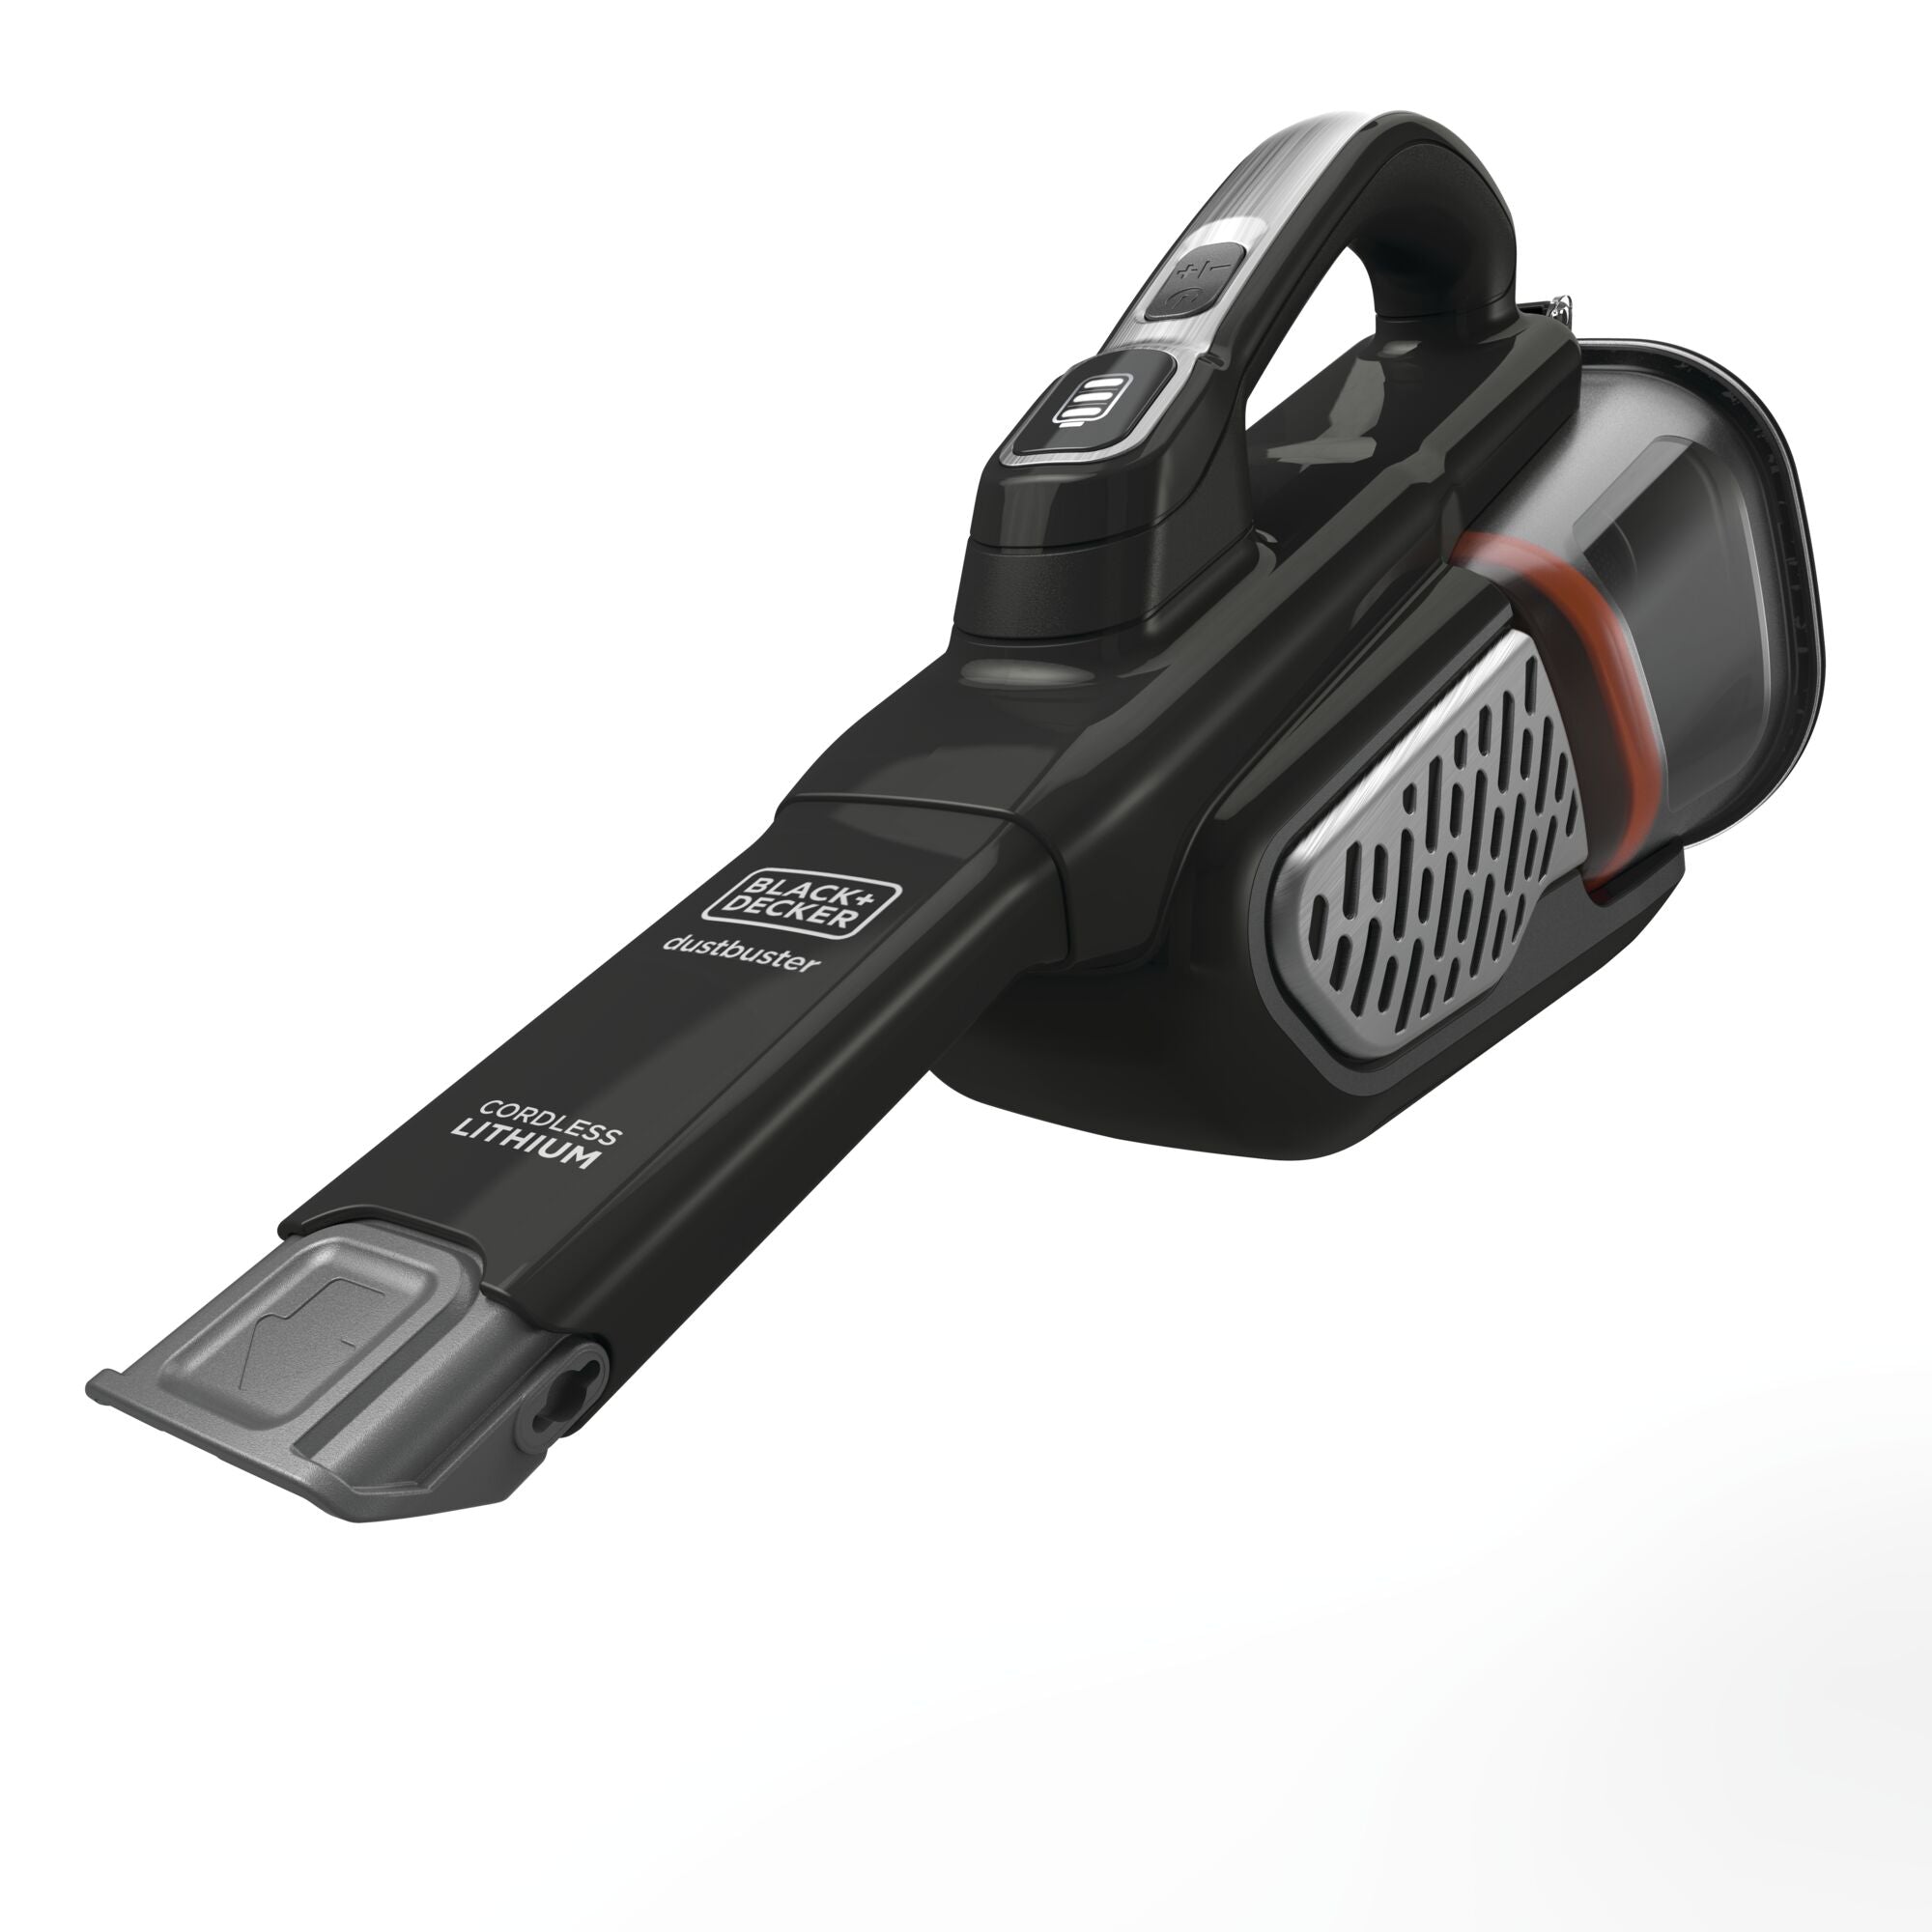 The Best Handheld Vacuum is the Black+Decker Dustbuster